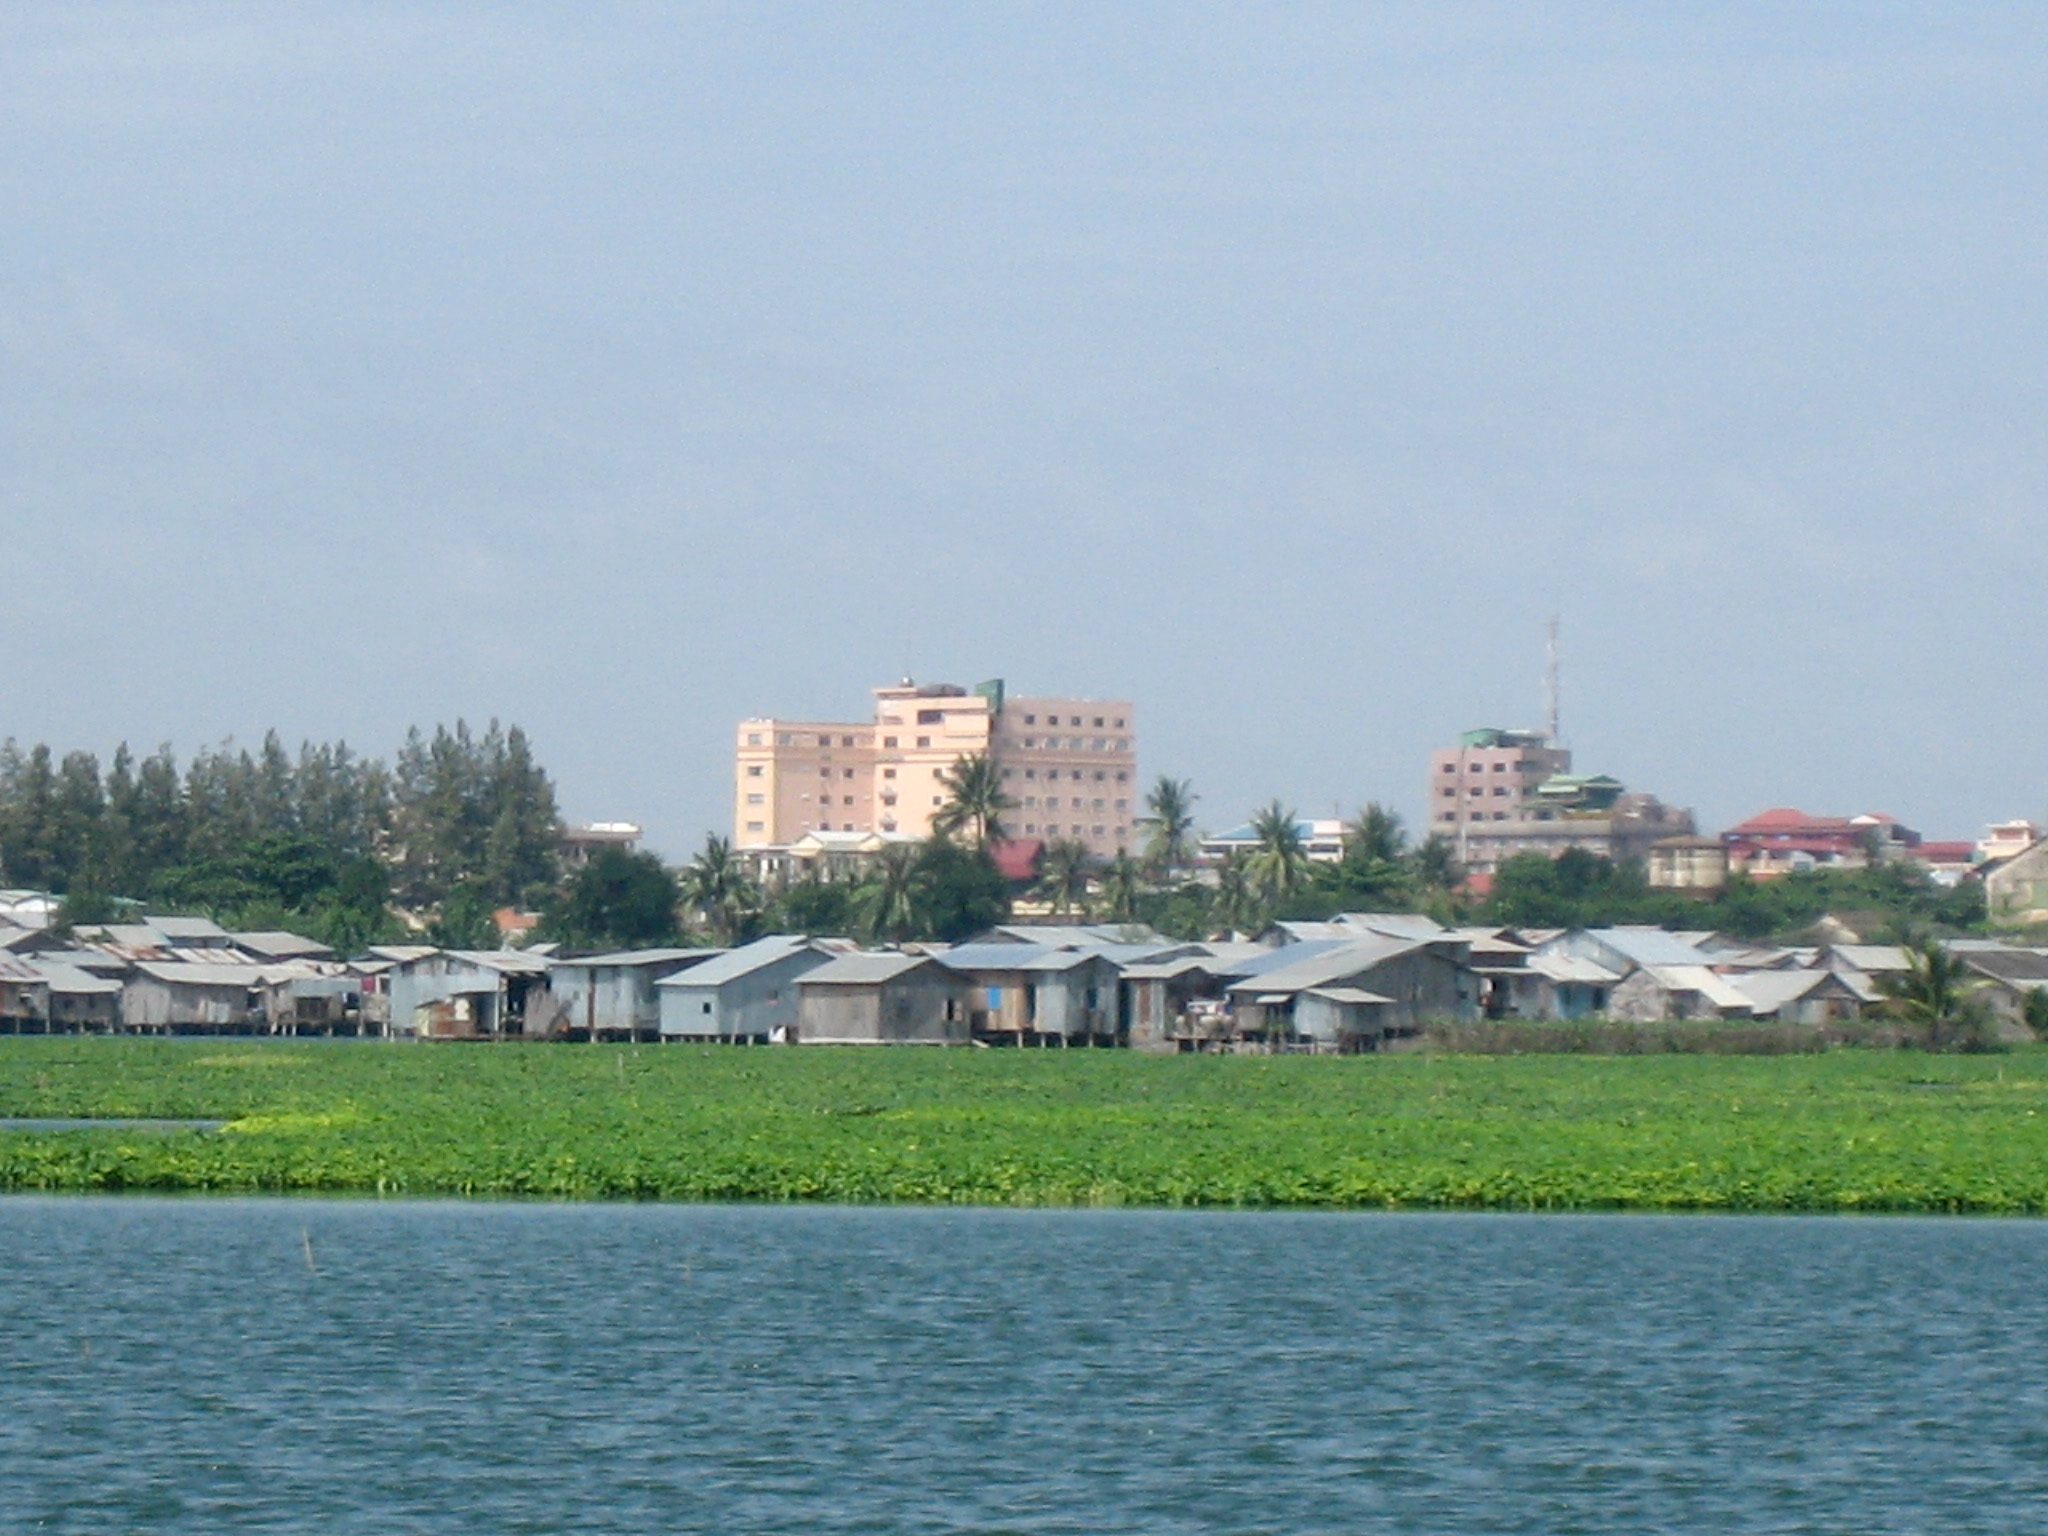 Boeung Kak Lake before the evictions.